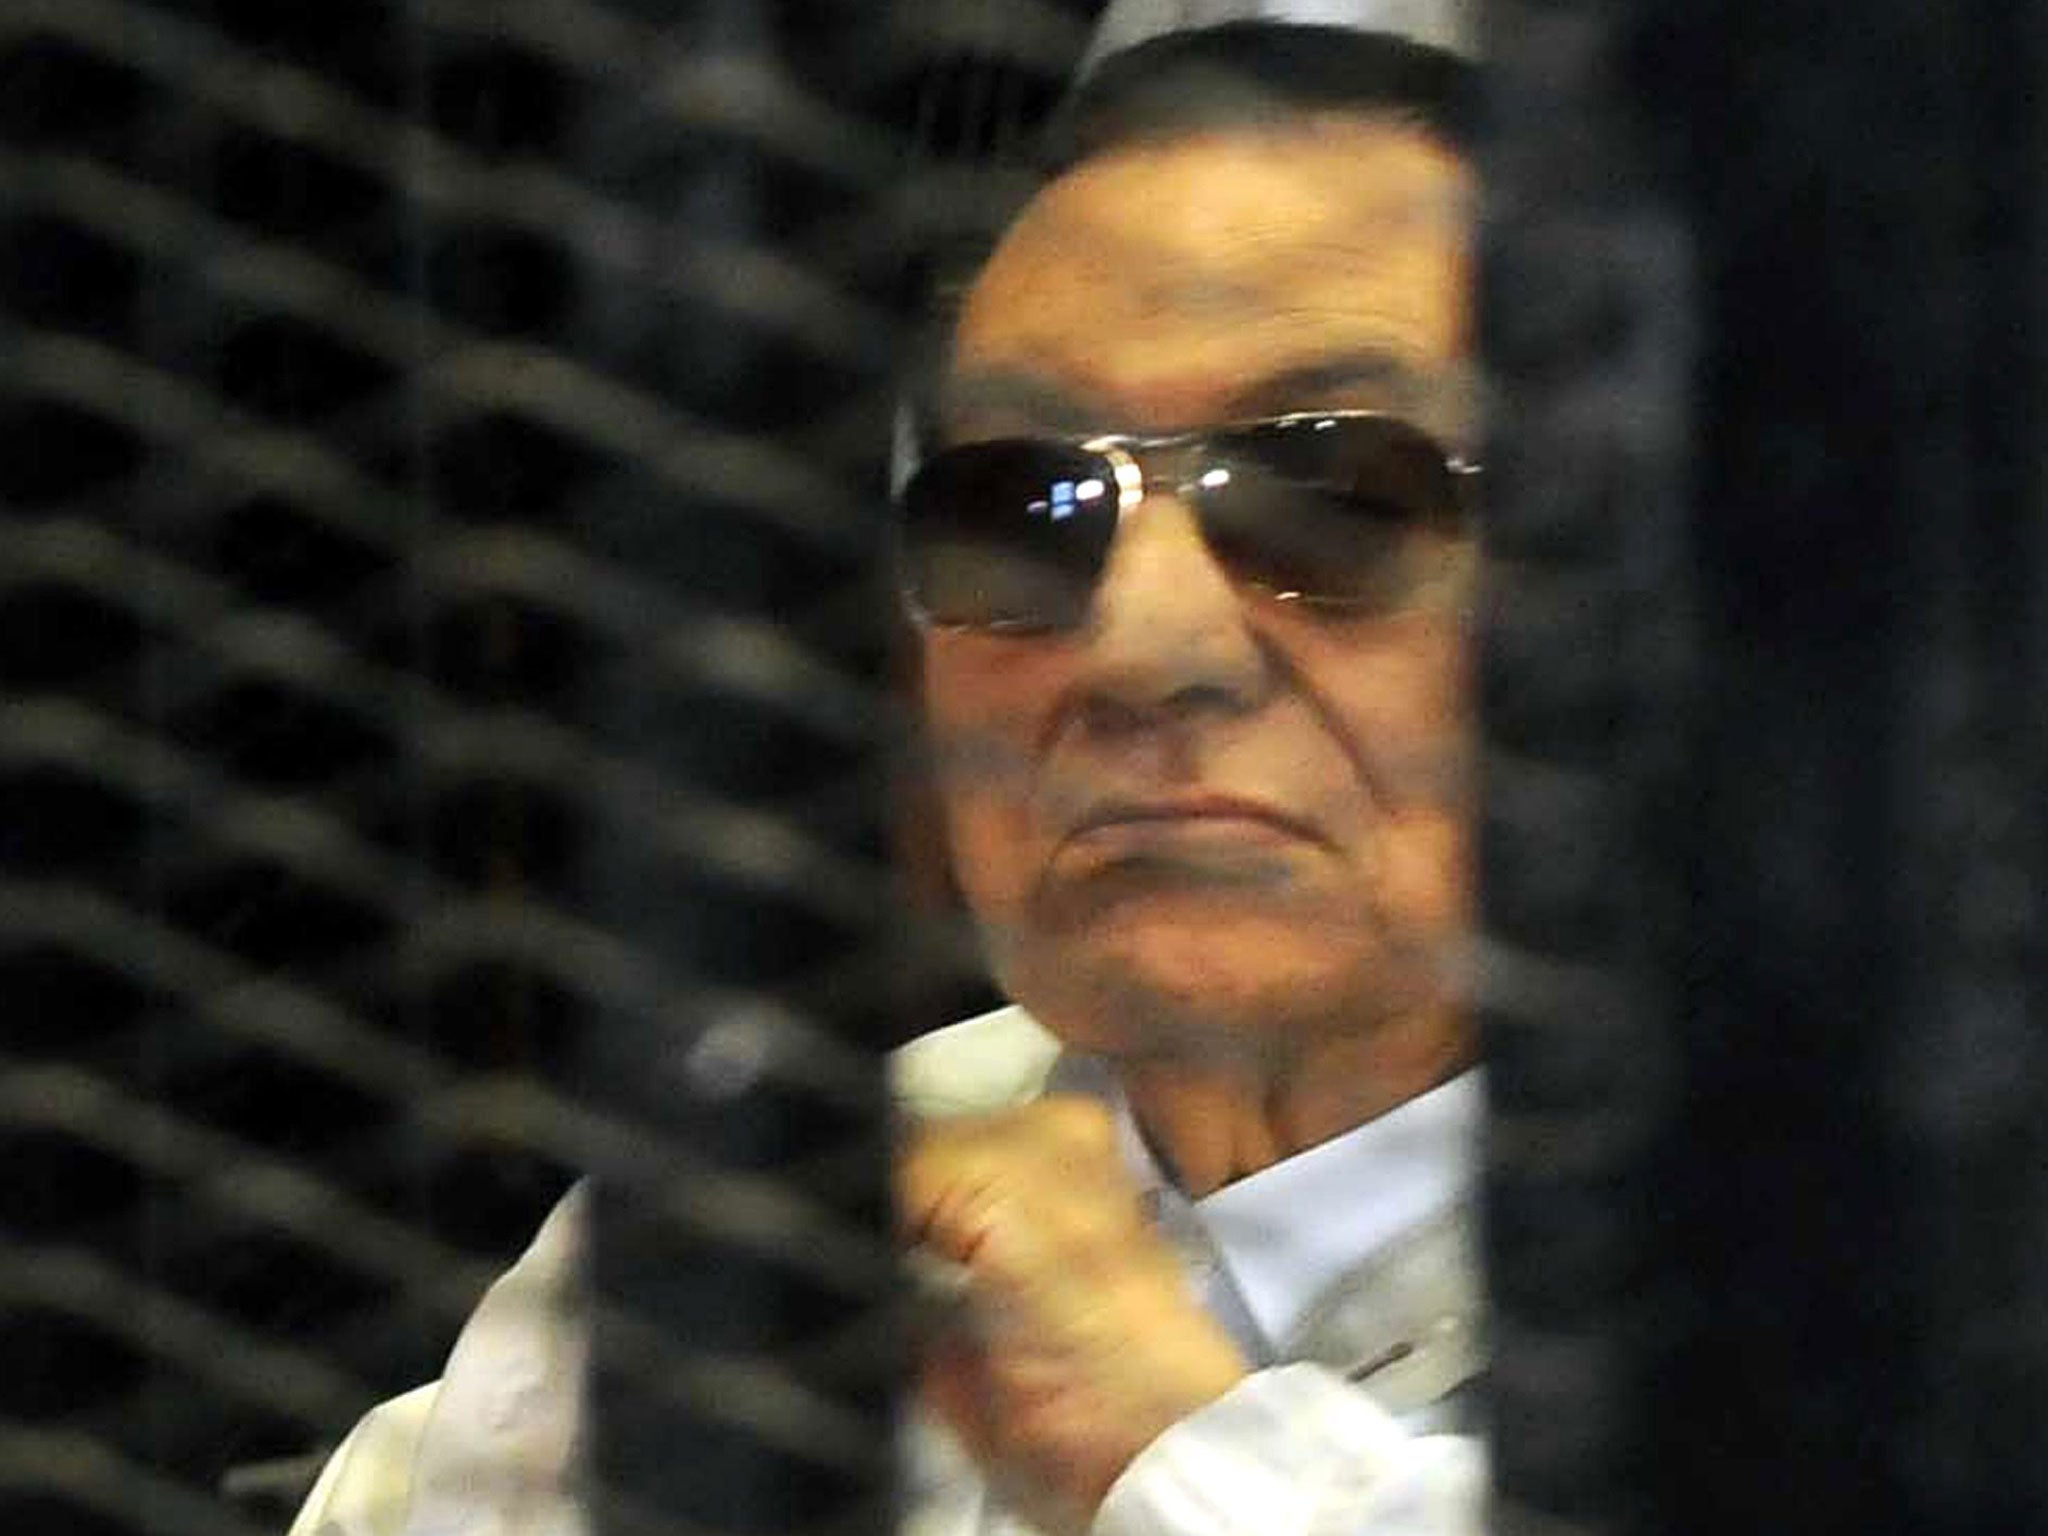 Hosni Mubarak has been sentenced to three years in jail